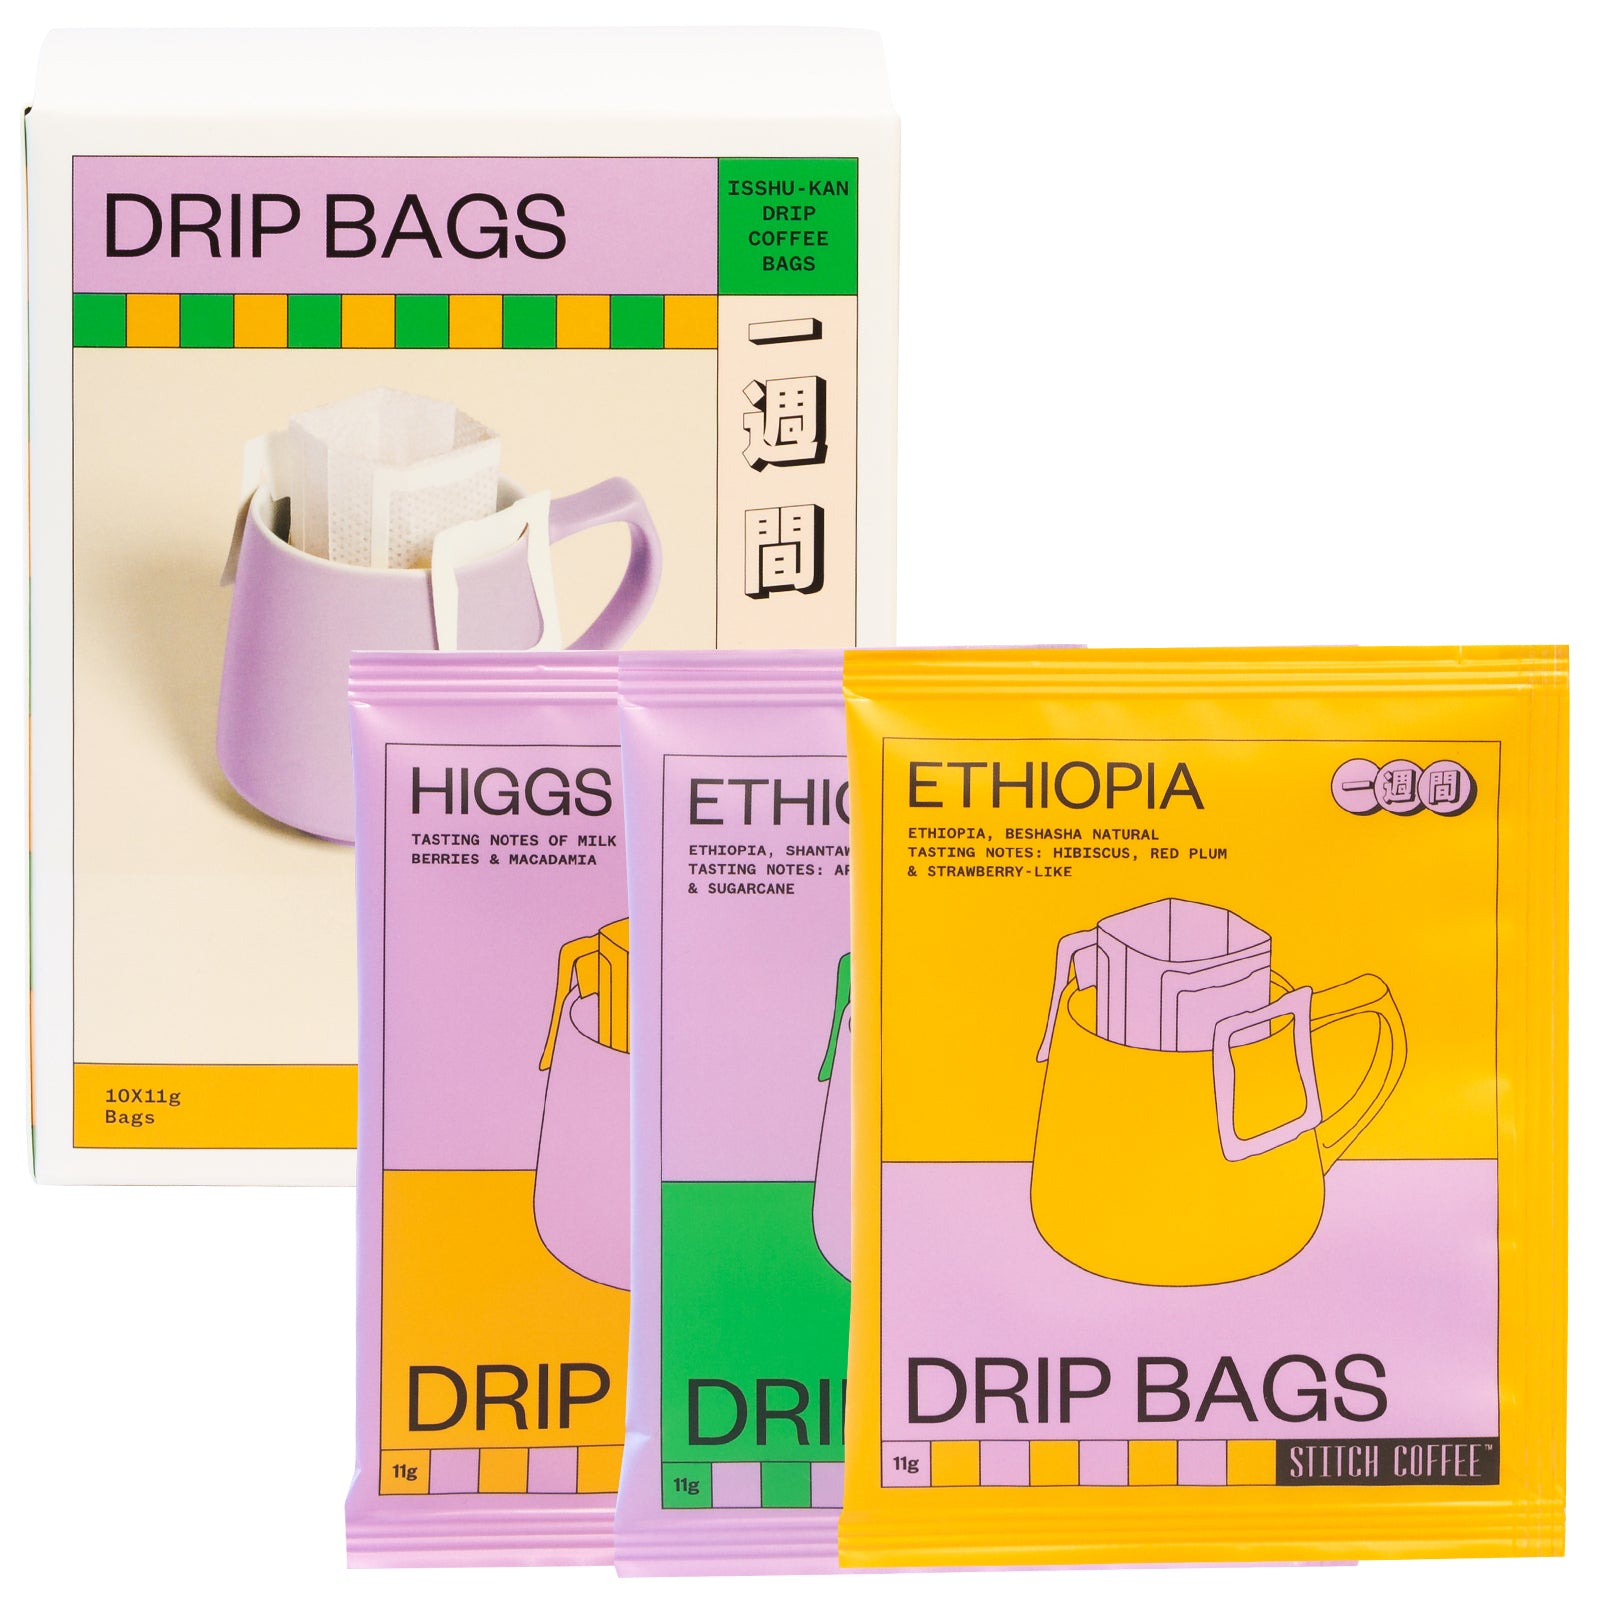 Isshu-kan Flight Box Drip Coffee Bags